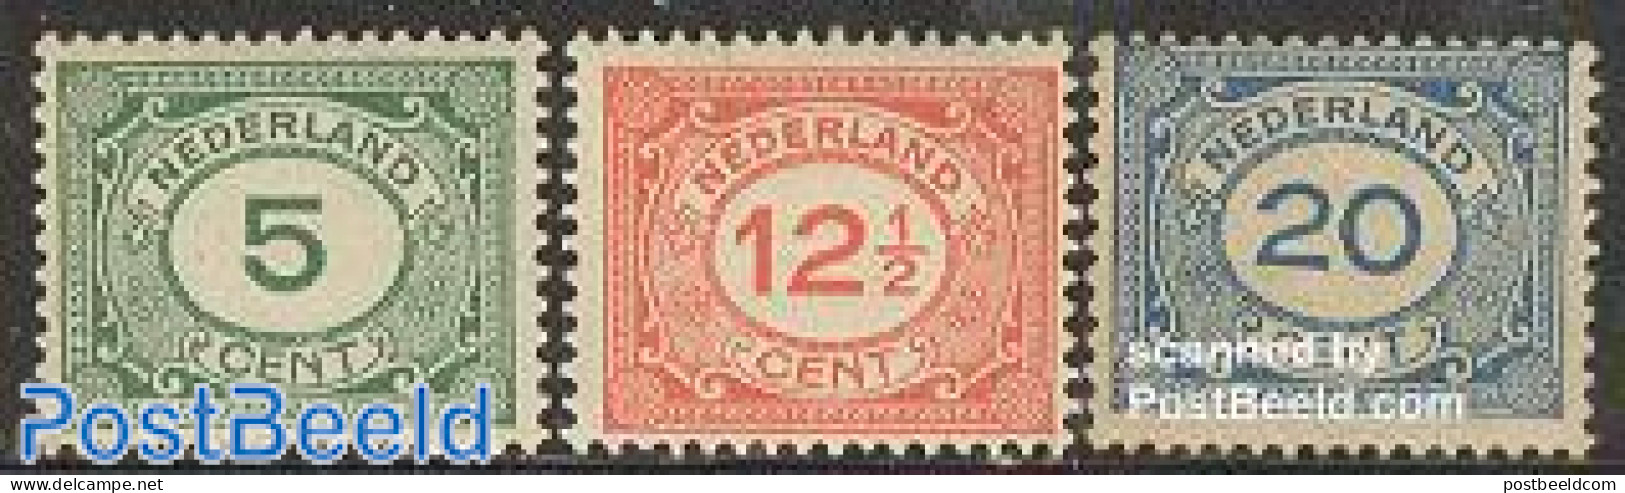 Netherlands 1921 Definitives 3v, Unused (hinged) - Ongebruikt